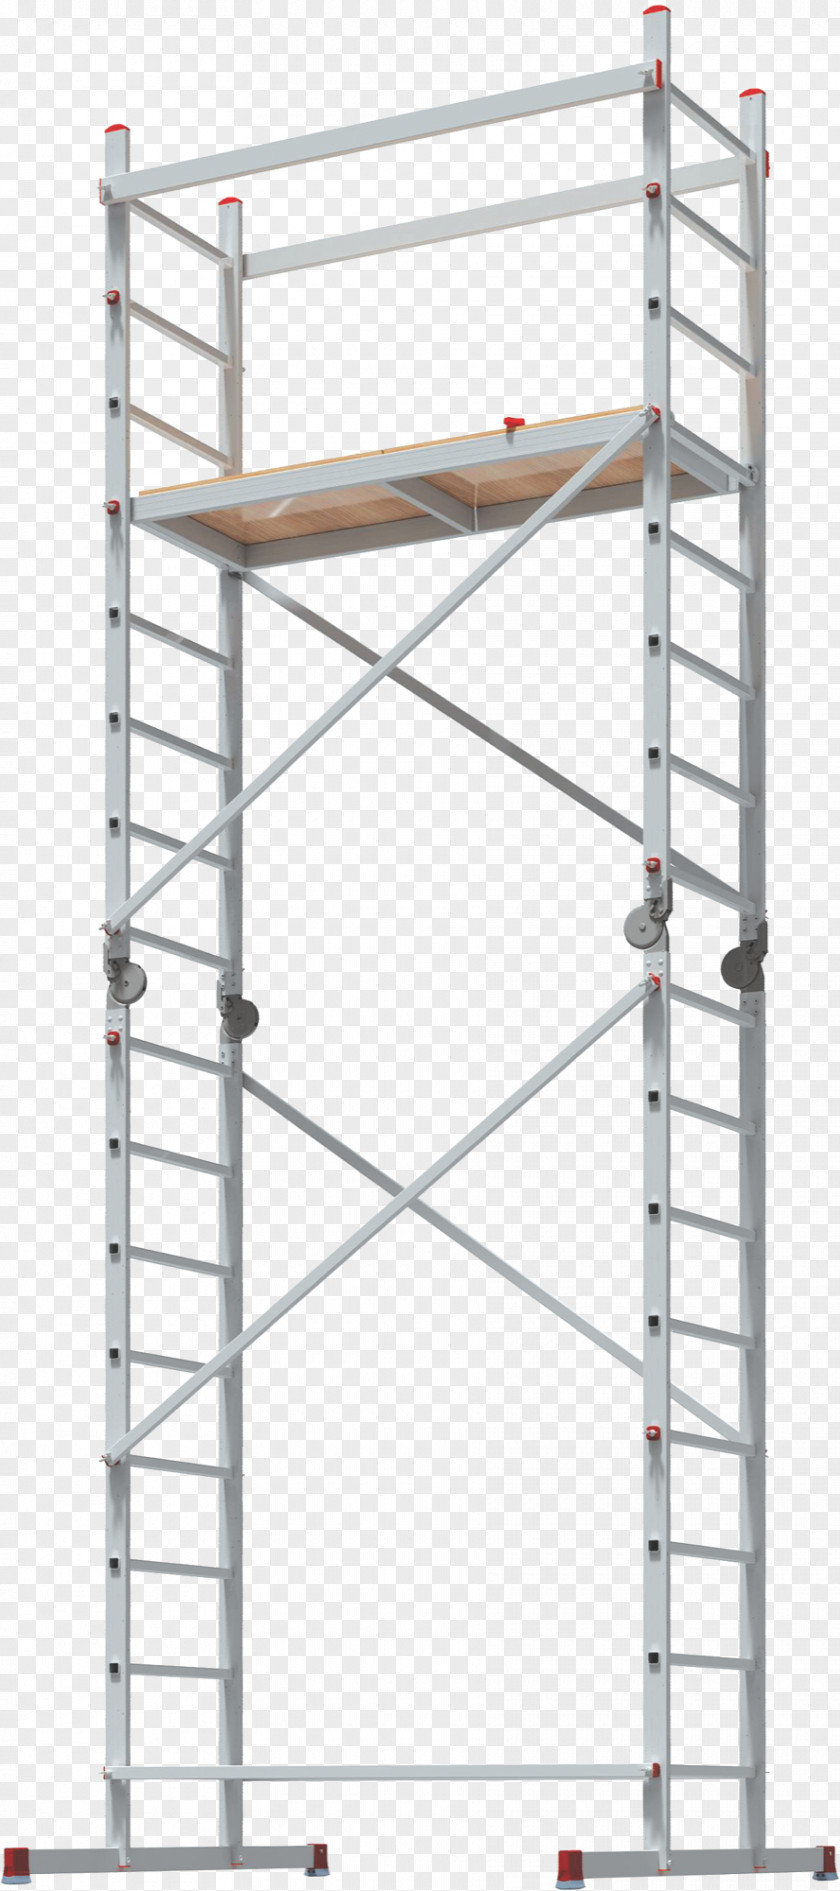 Ladder Scaffolding Тура Saint Petersburg Price PNG